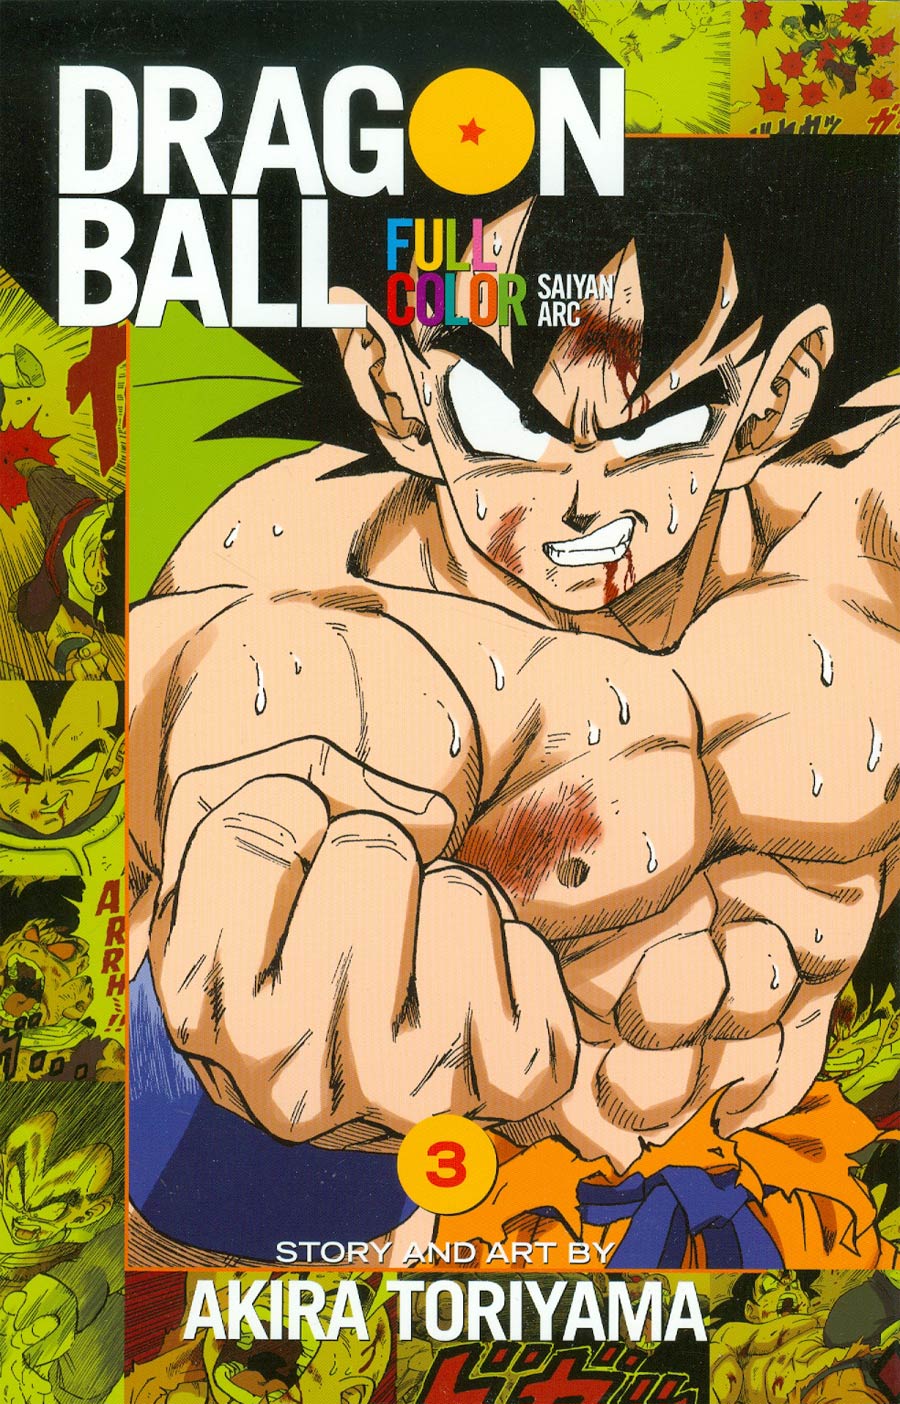 Dragon Ball Full Color Saiyan Arc Vol 3 TP